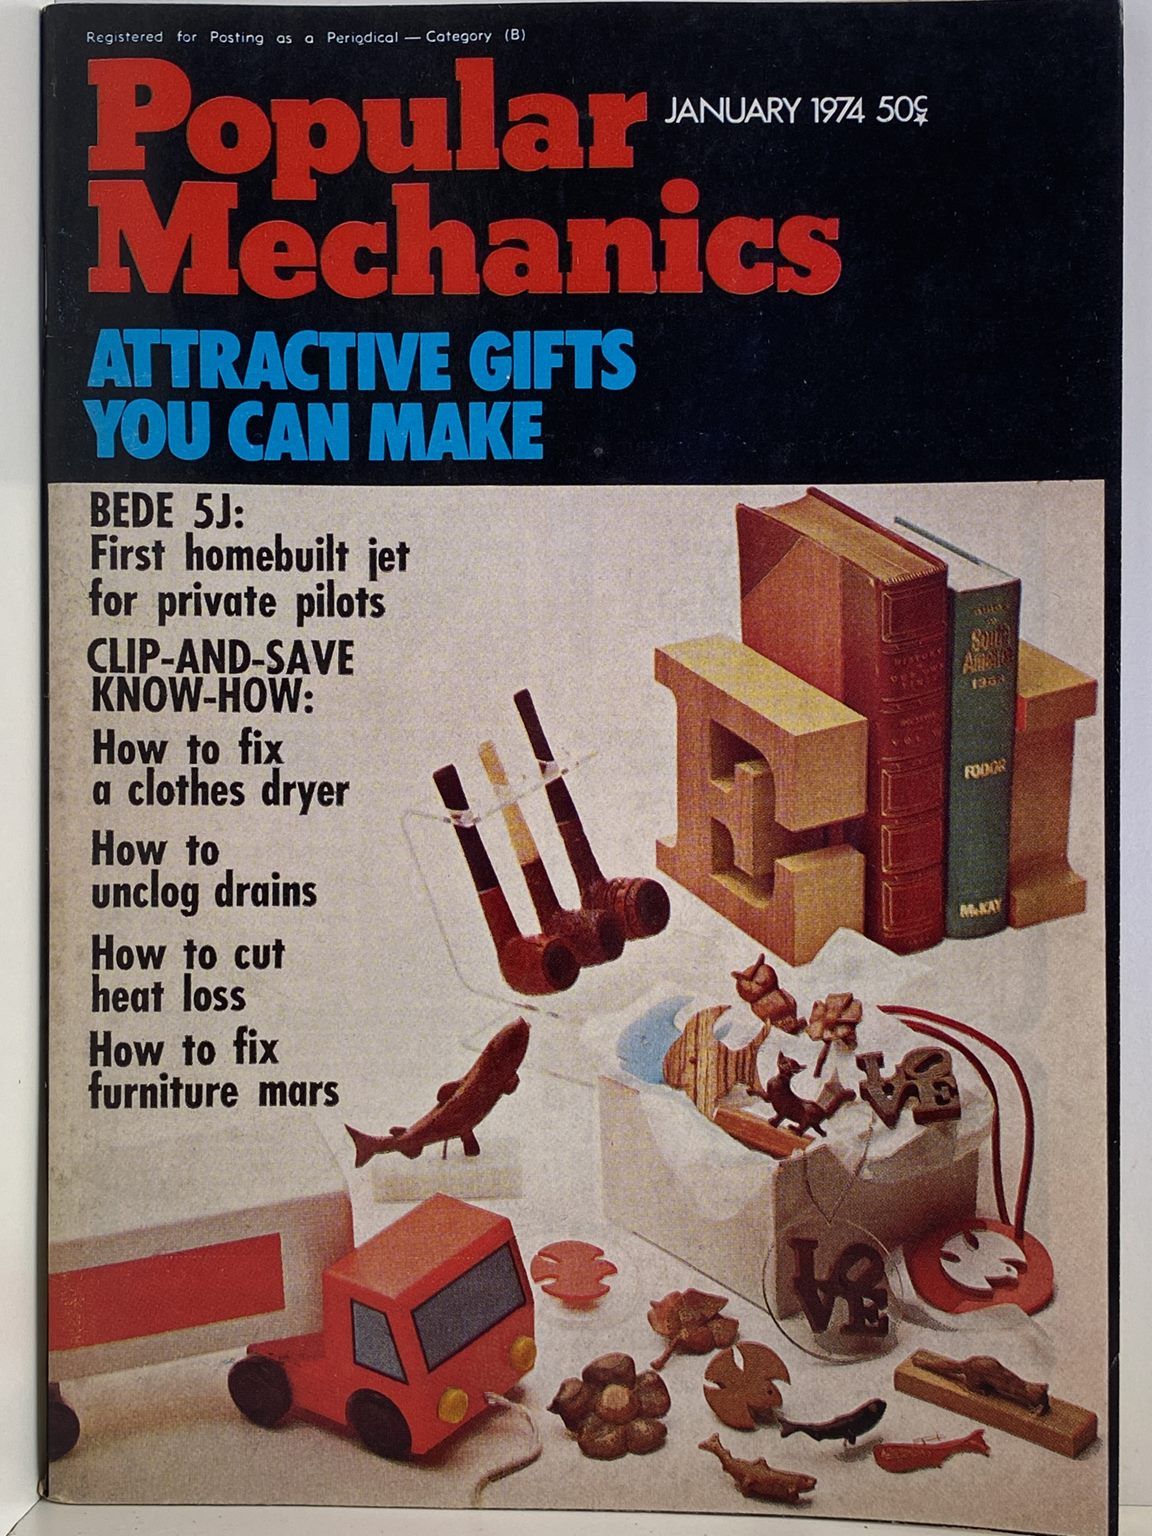 VINTAGE MAGAZINE: Popular Mechanics - Vol. 140, No. 5 - January 1974